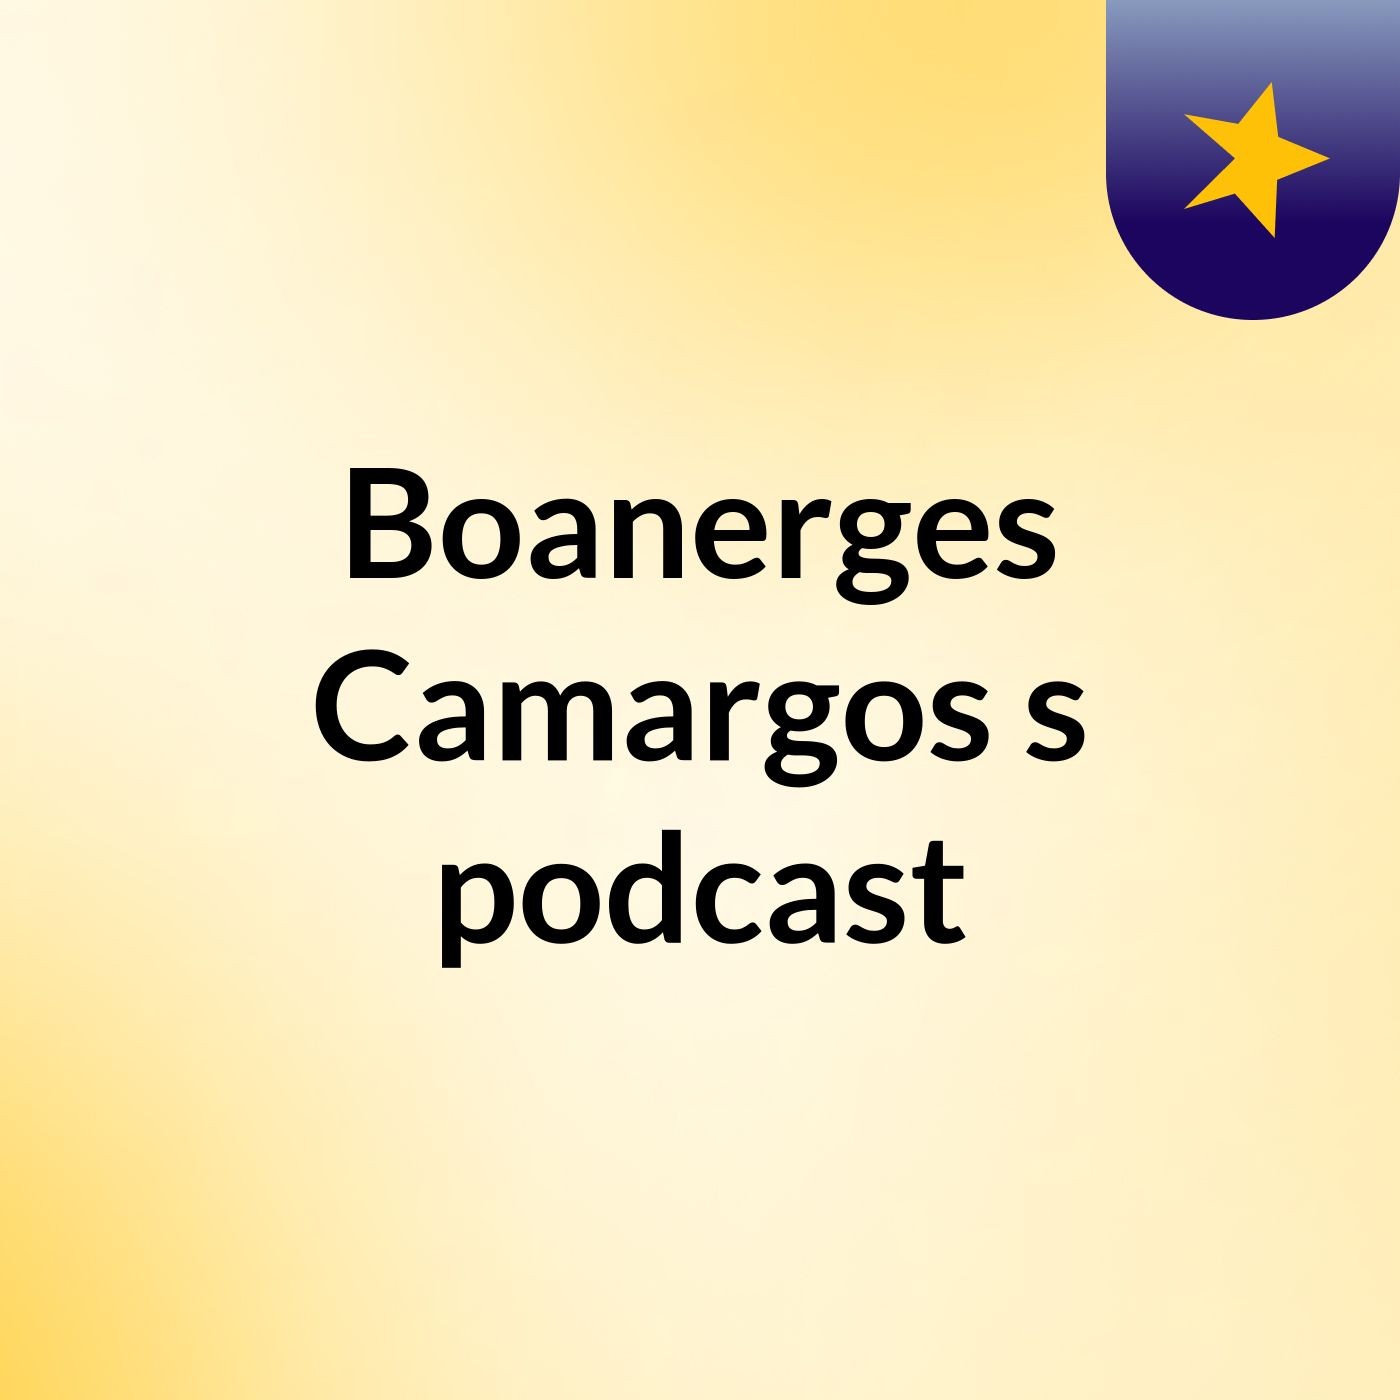 Boanerges Camargos's podcast